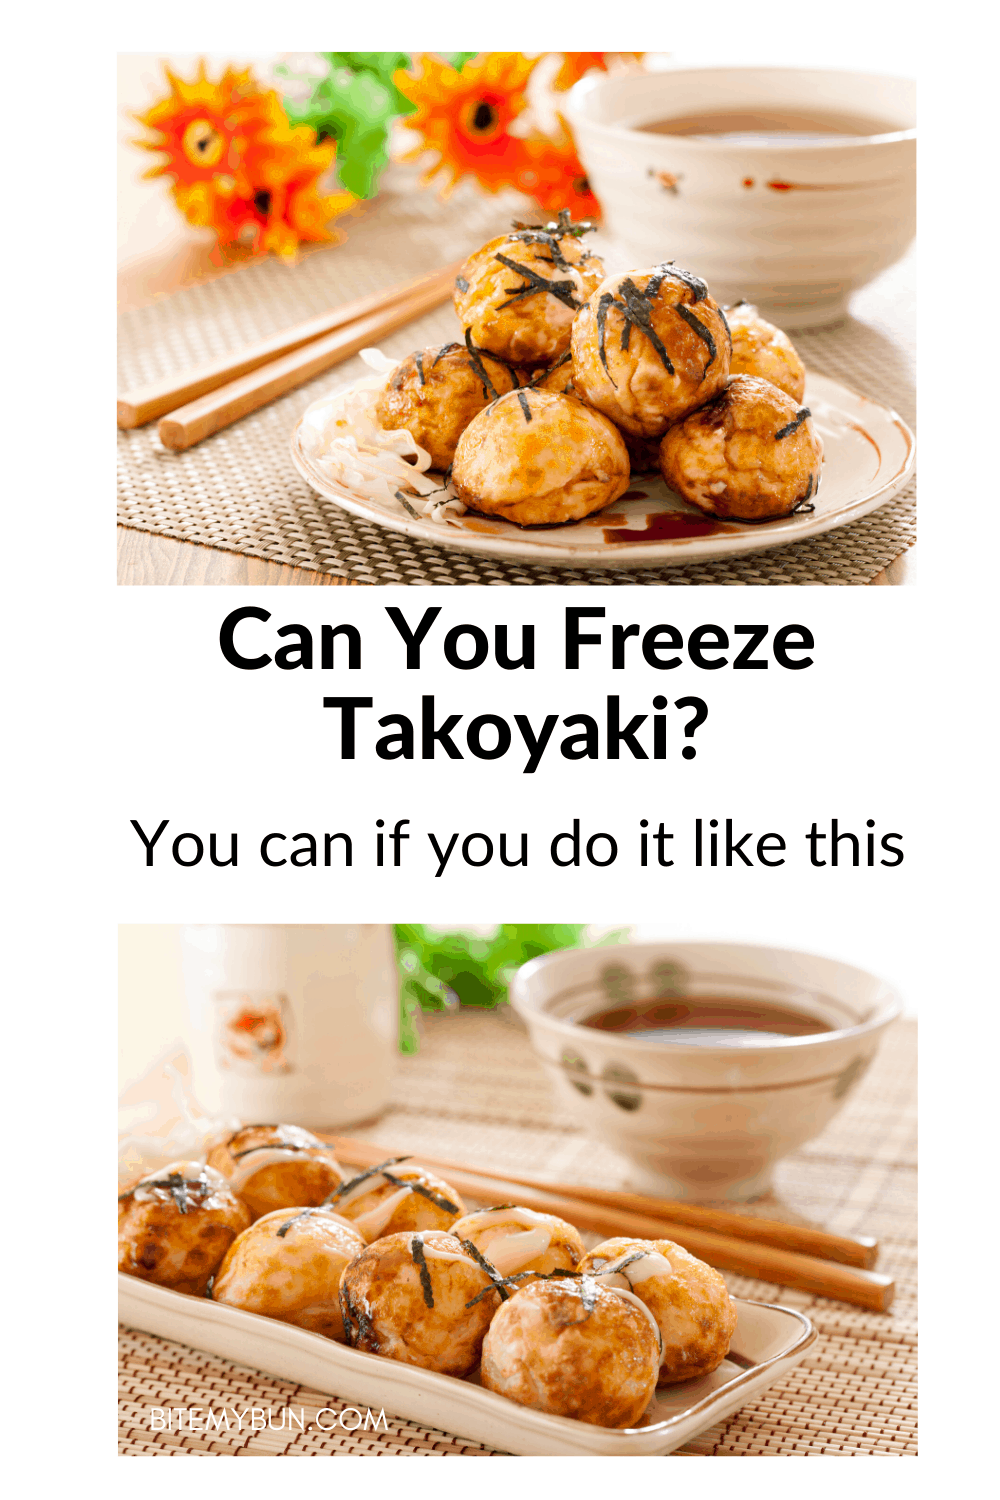 Can you freeze takoyaki